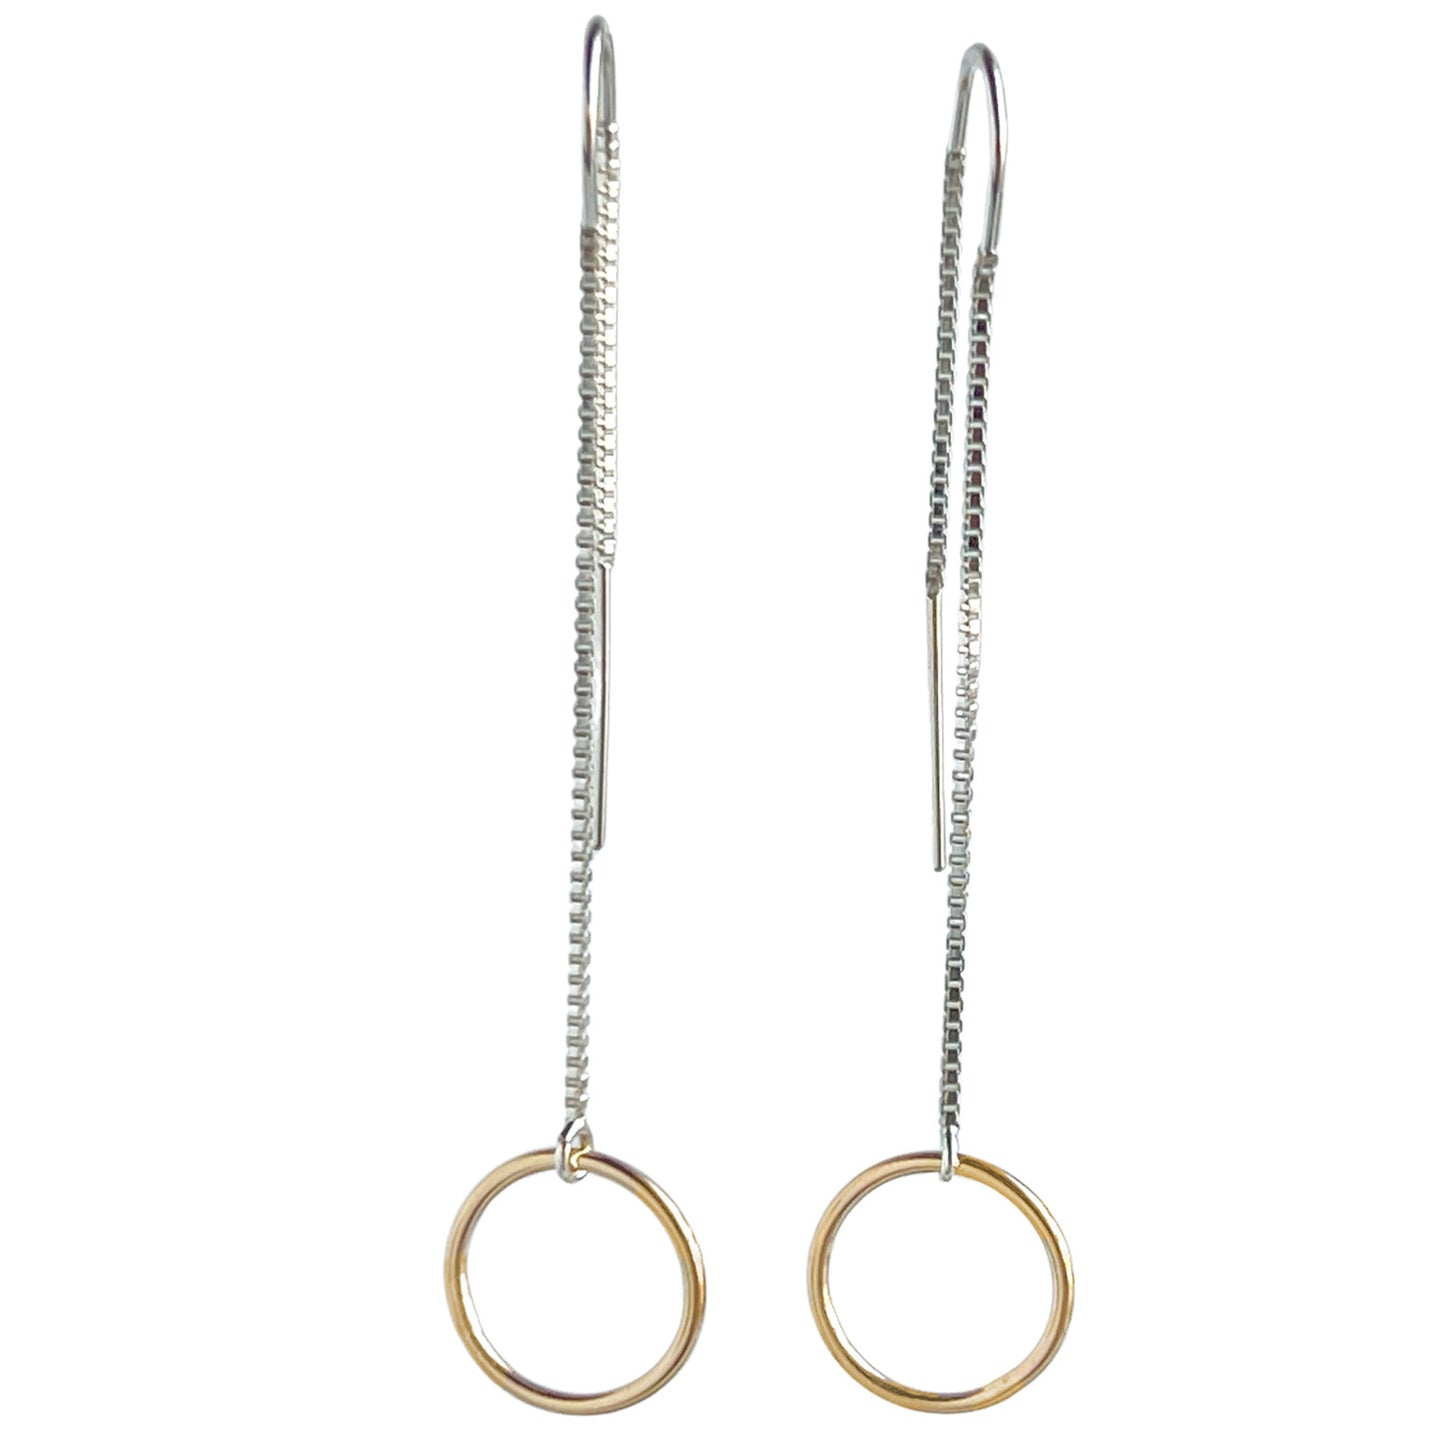 Chic Long Dangle Threader Earrings - 925 Sterling Silver or 14k Gold Filled